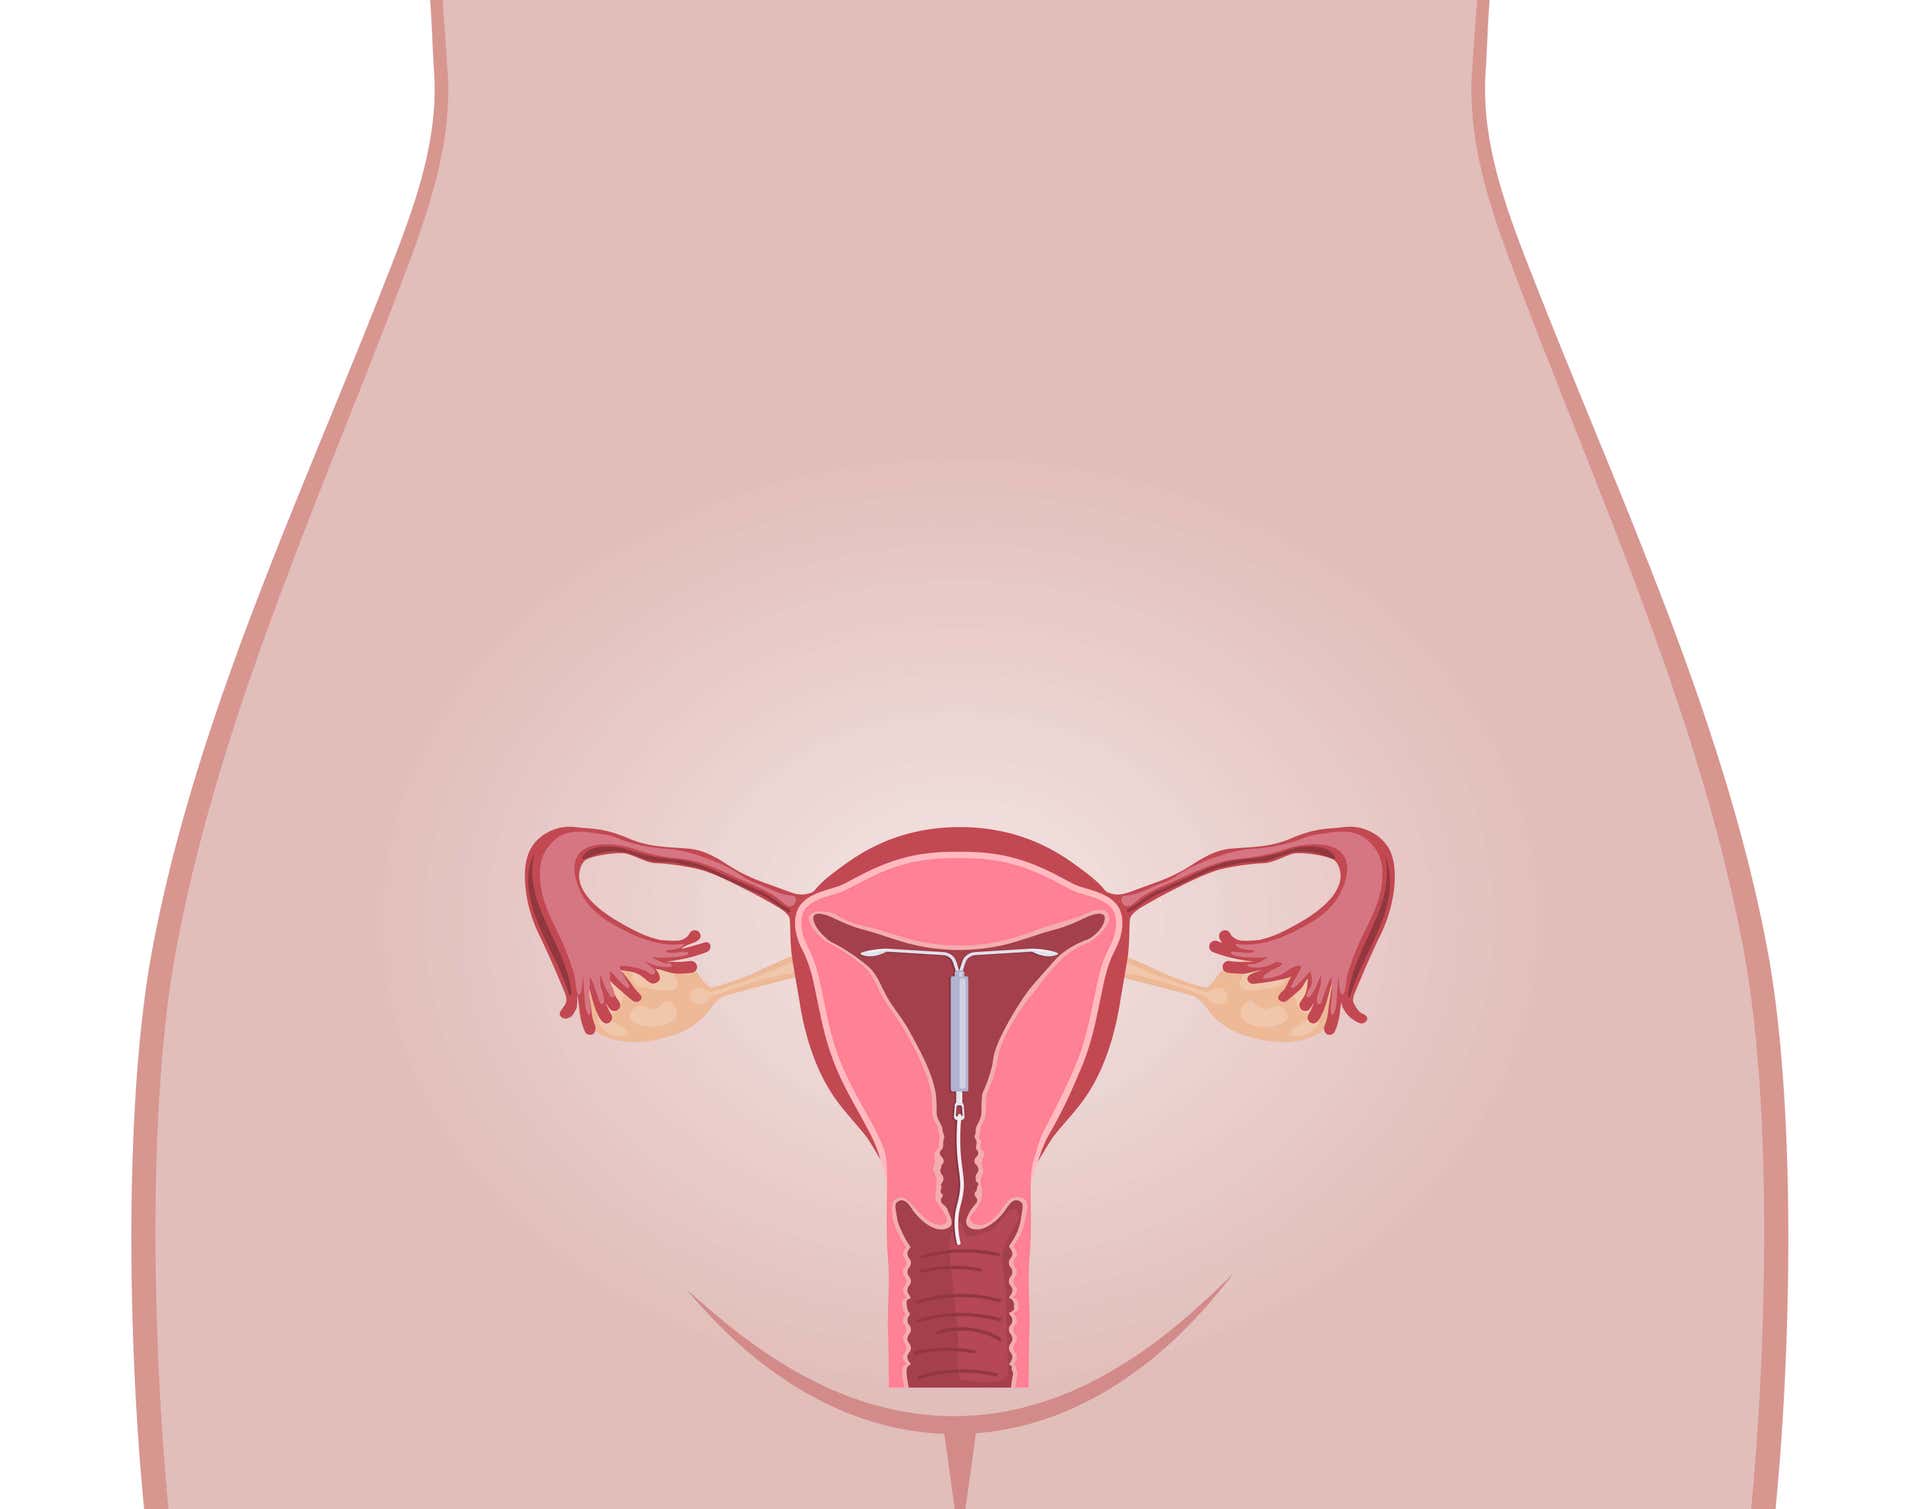 Órgano reproductor femenino